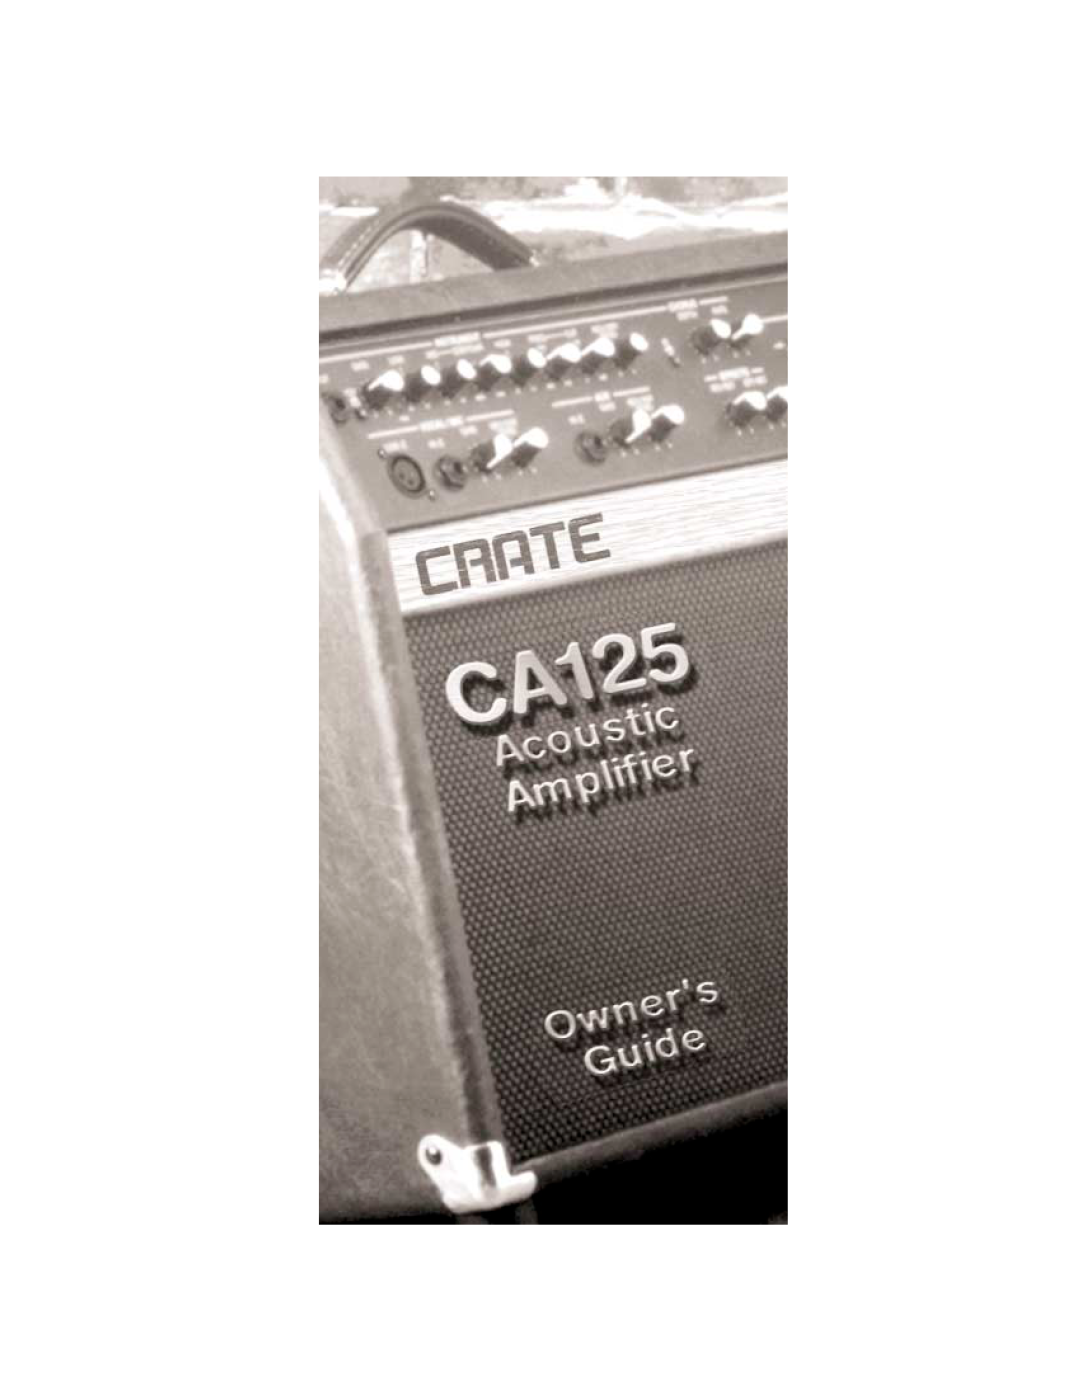 Crate Amplifiers CA125 manual 